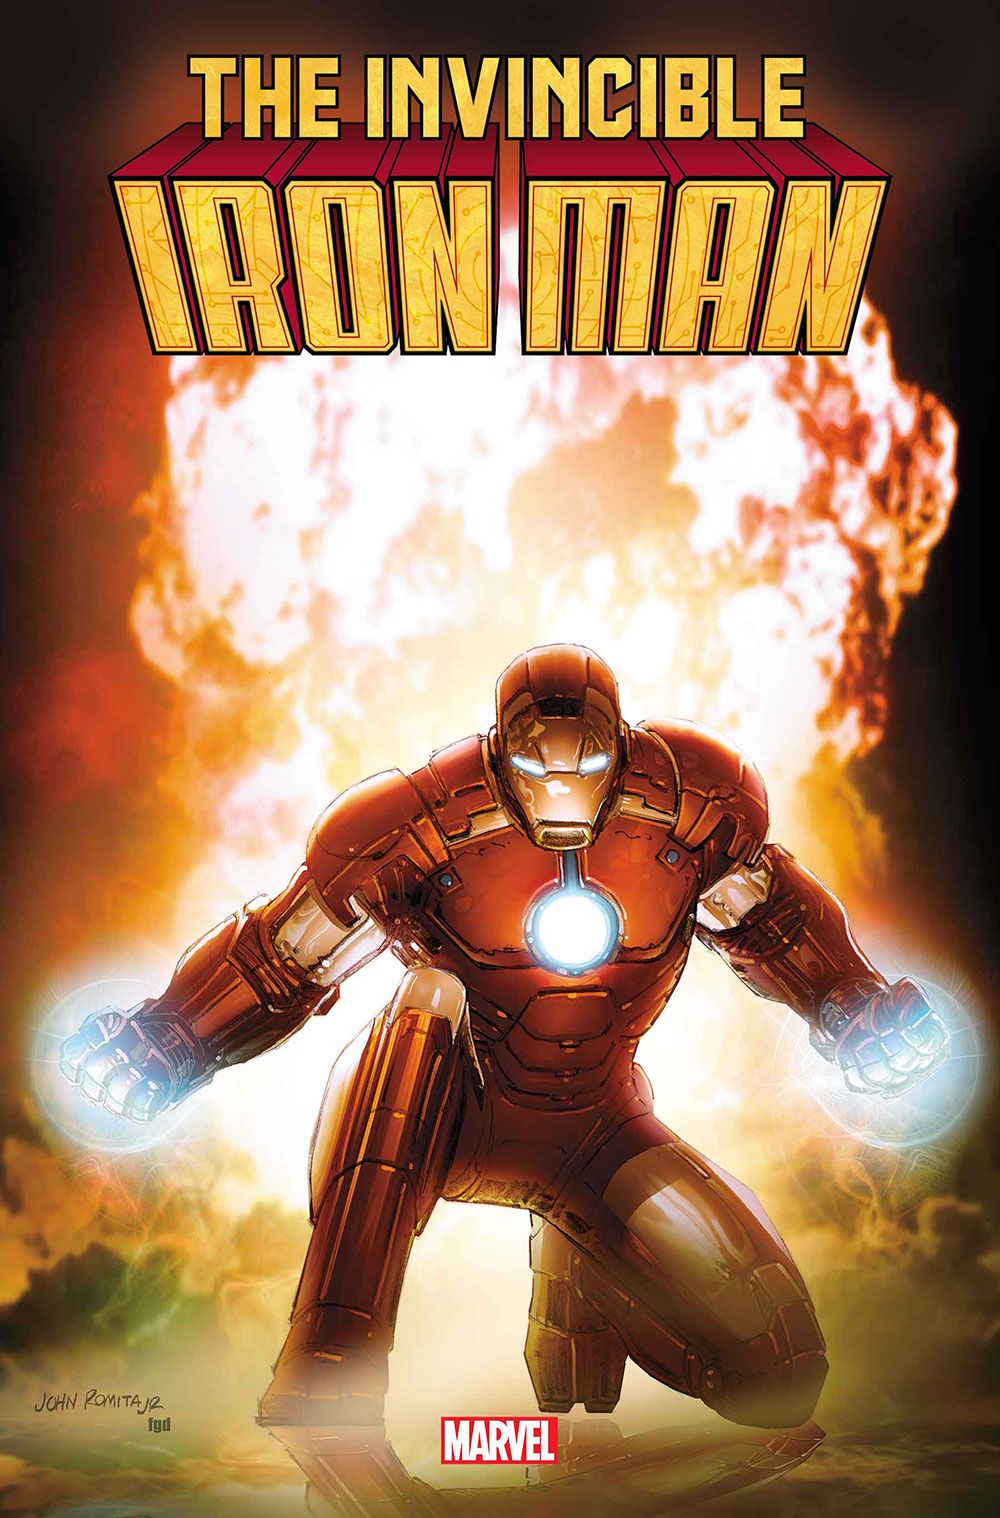 Tony Stark Goes Dark in New Iron Man Trailer